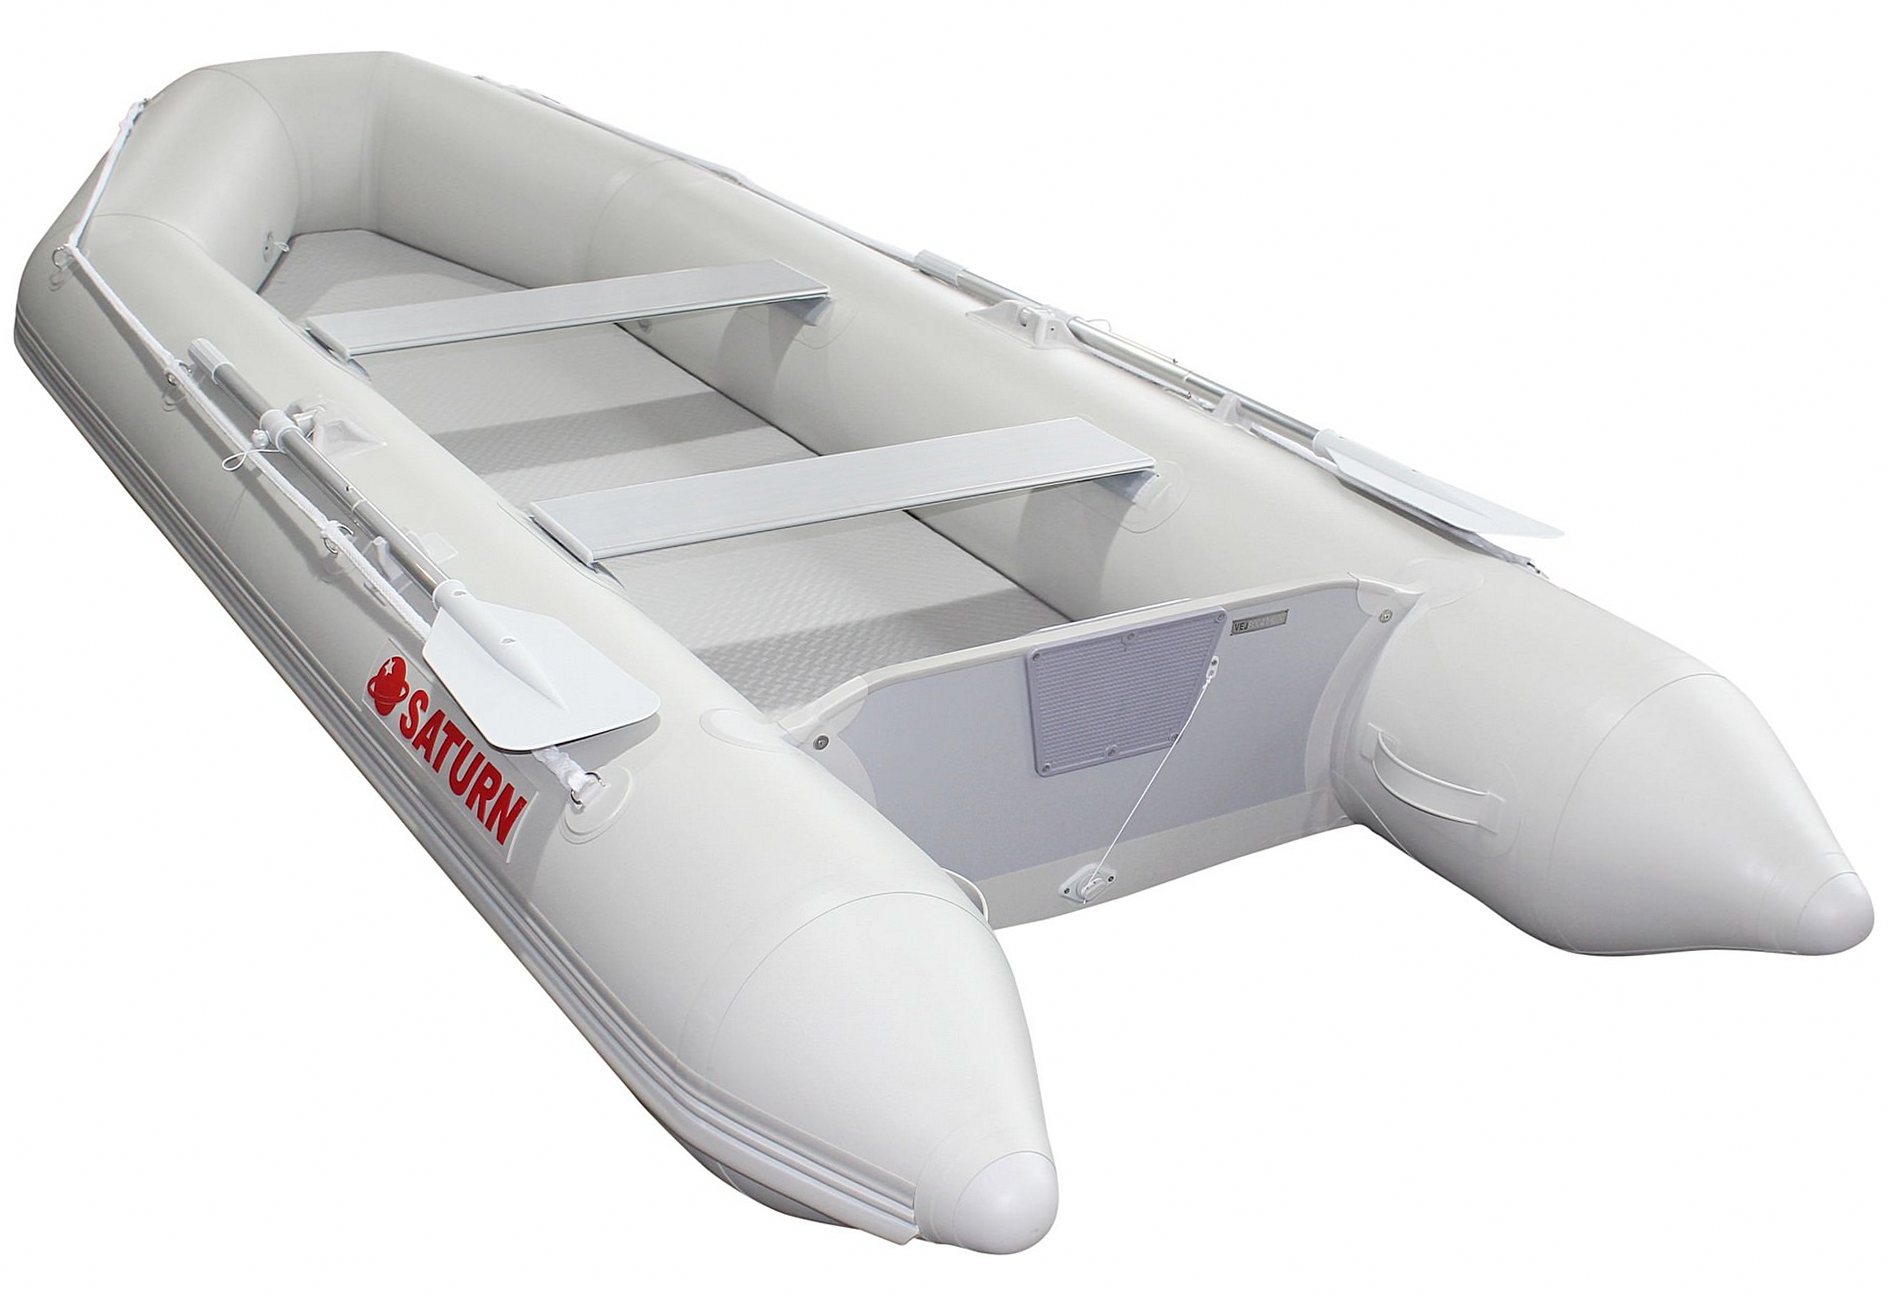 12' Budget Inflatable Kayak IK365